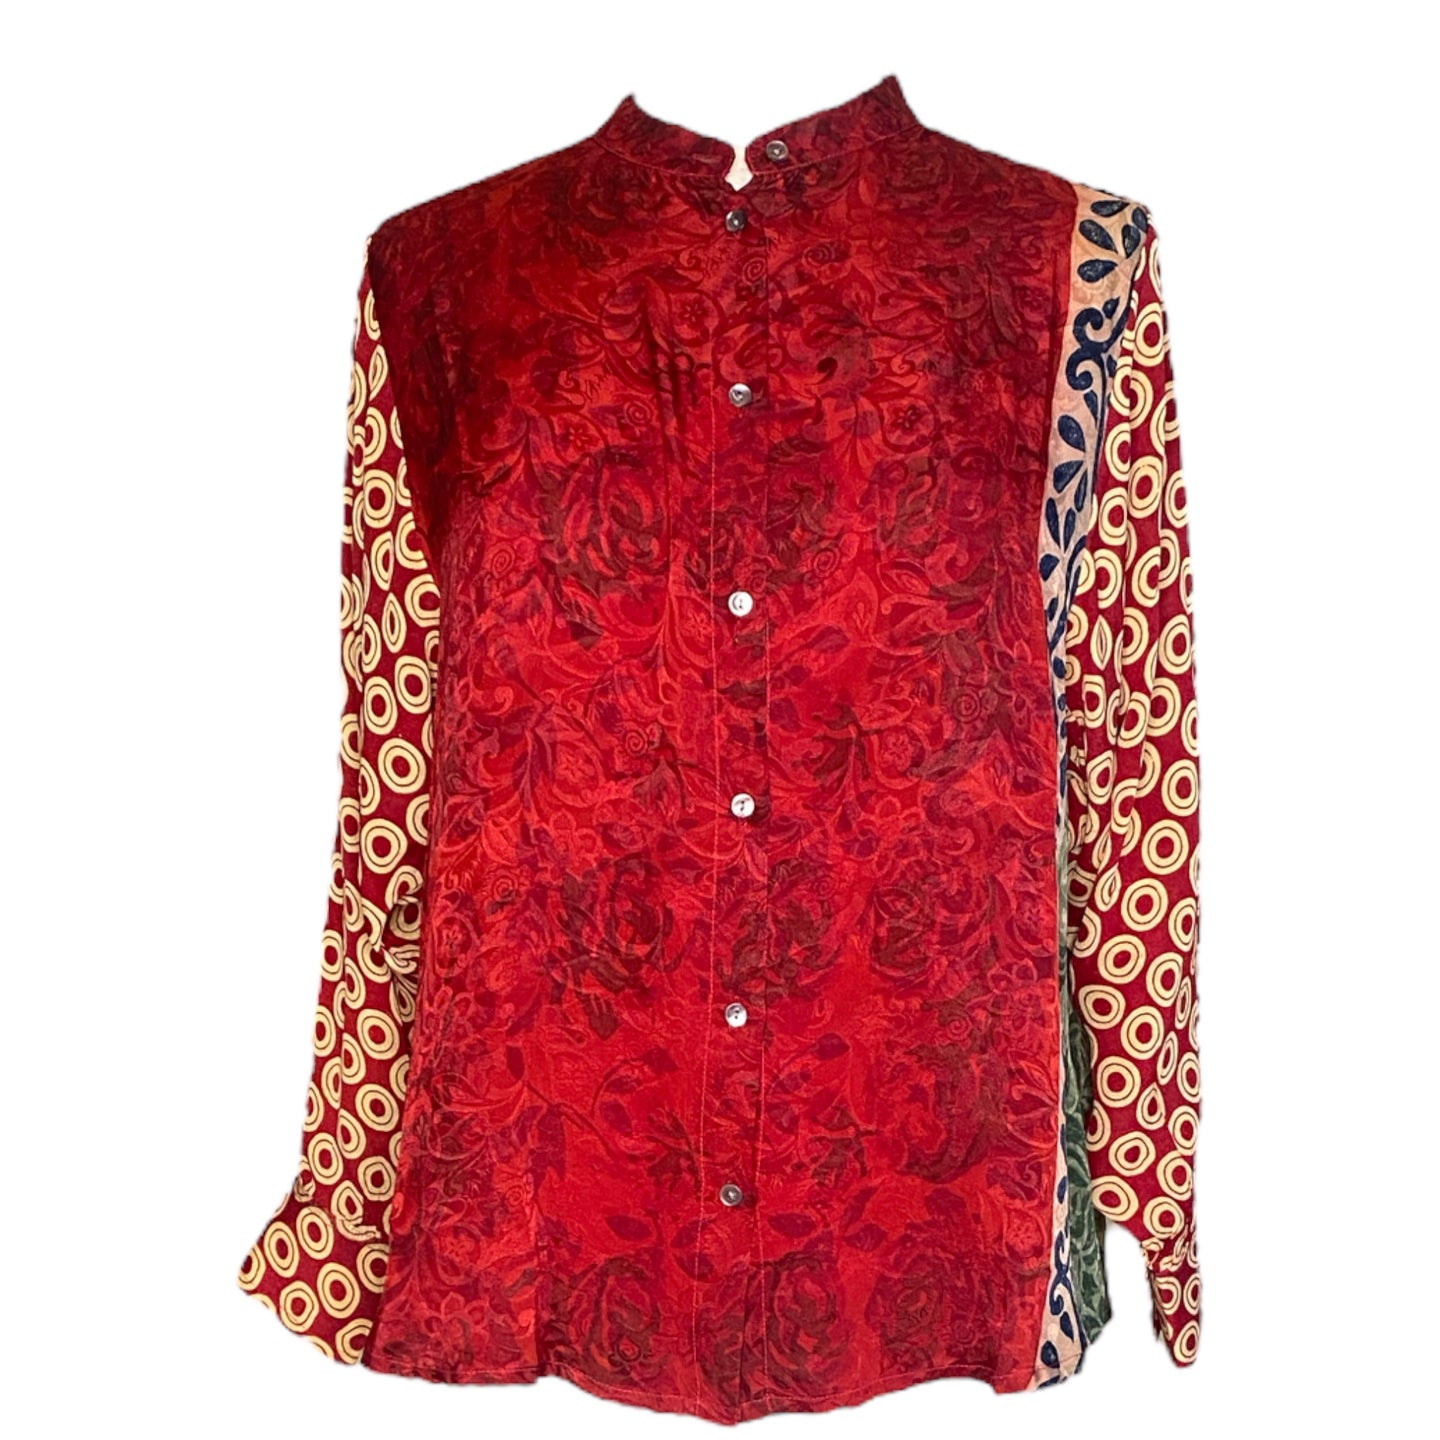 Silkeskjorte, model Asti, røde nuancer fra Cofur str small/medium